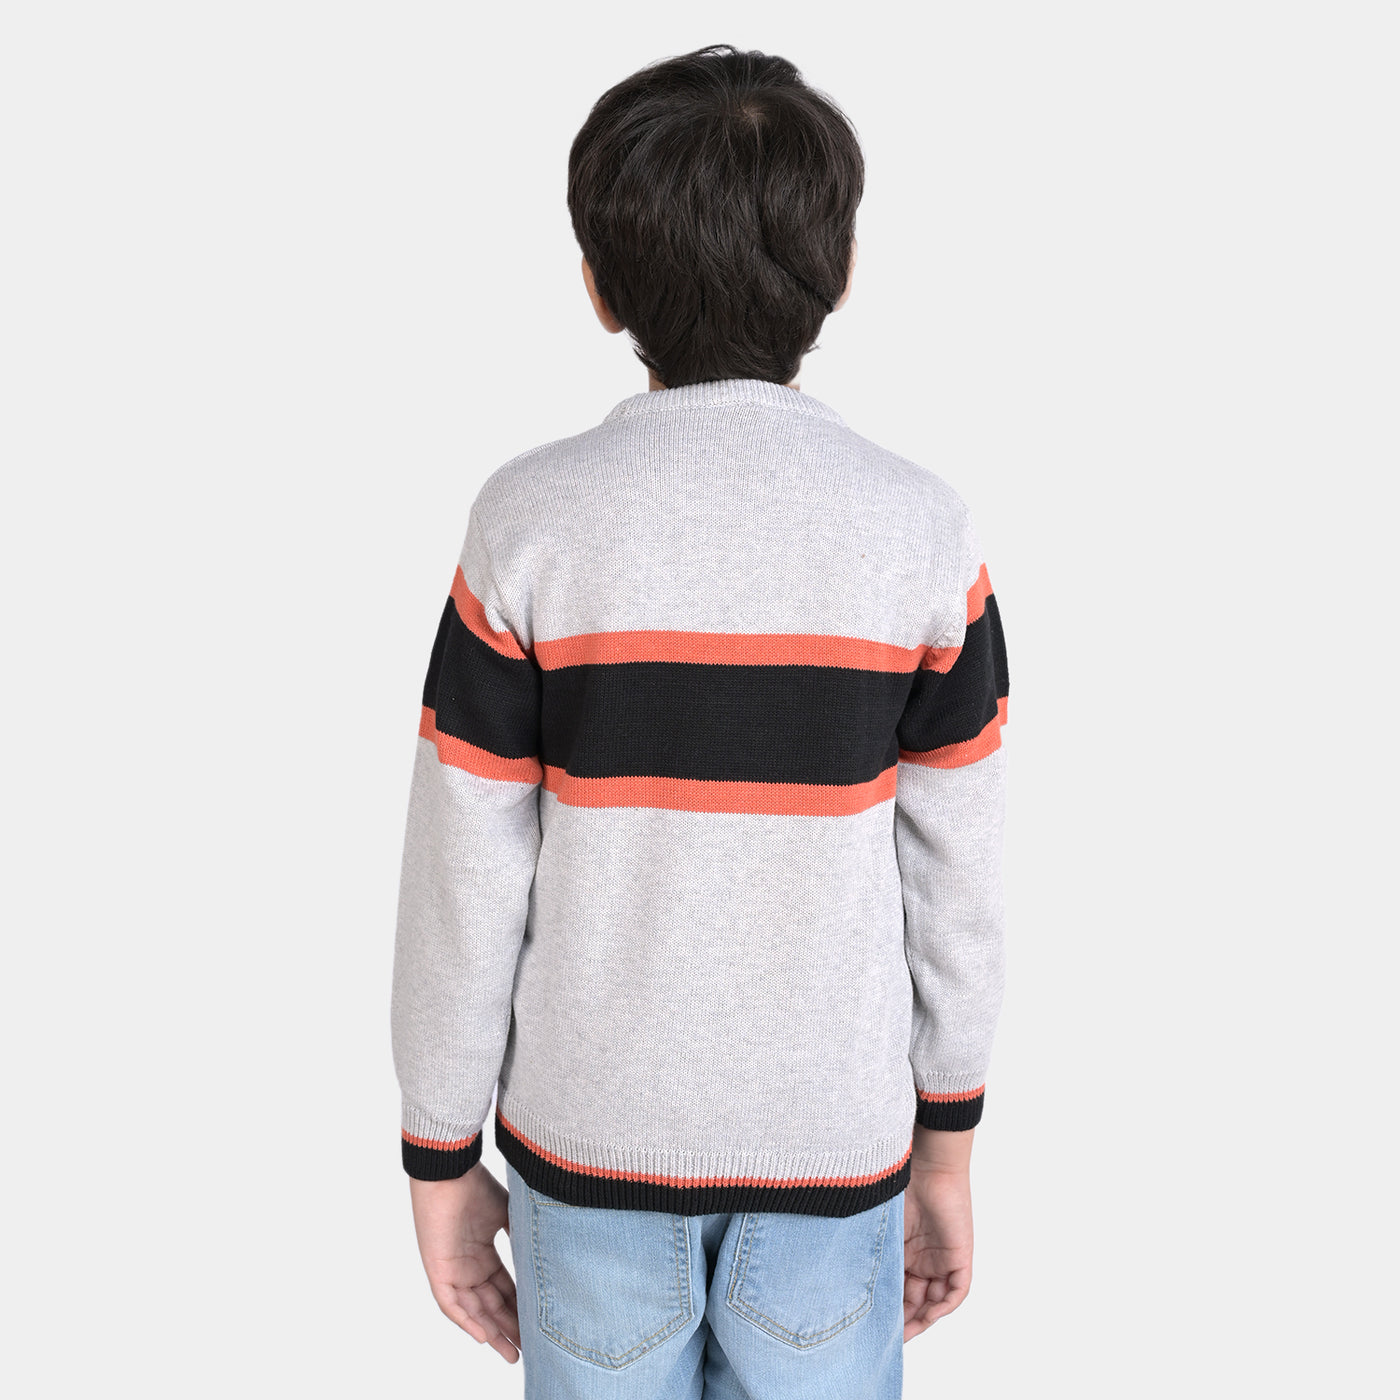 Boys Acrylic Full Sleeves Sweater Striper-Grey/Black